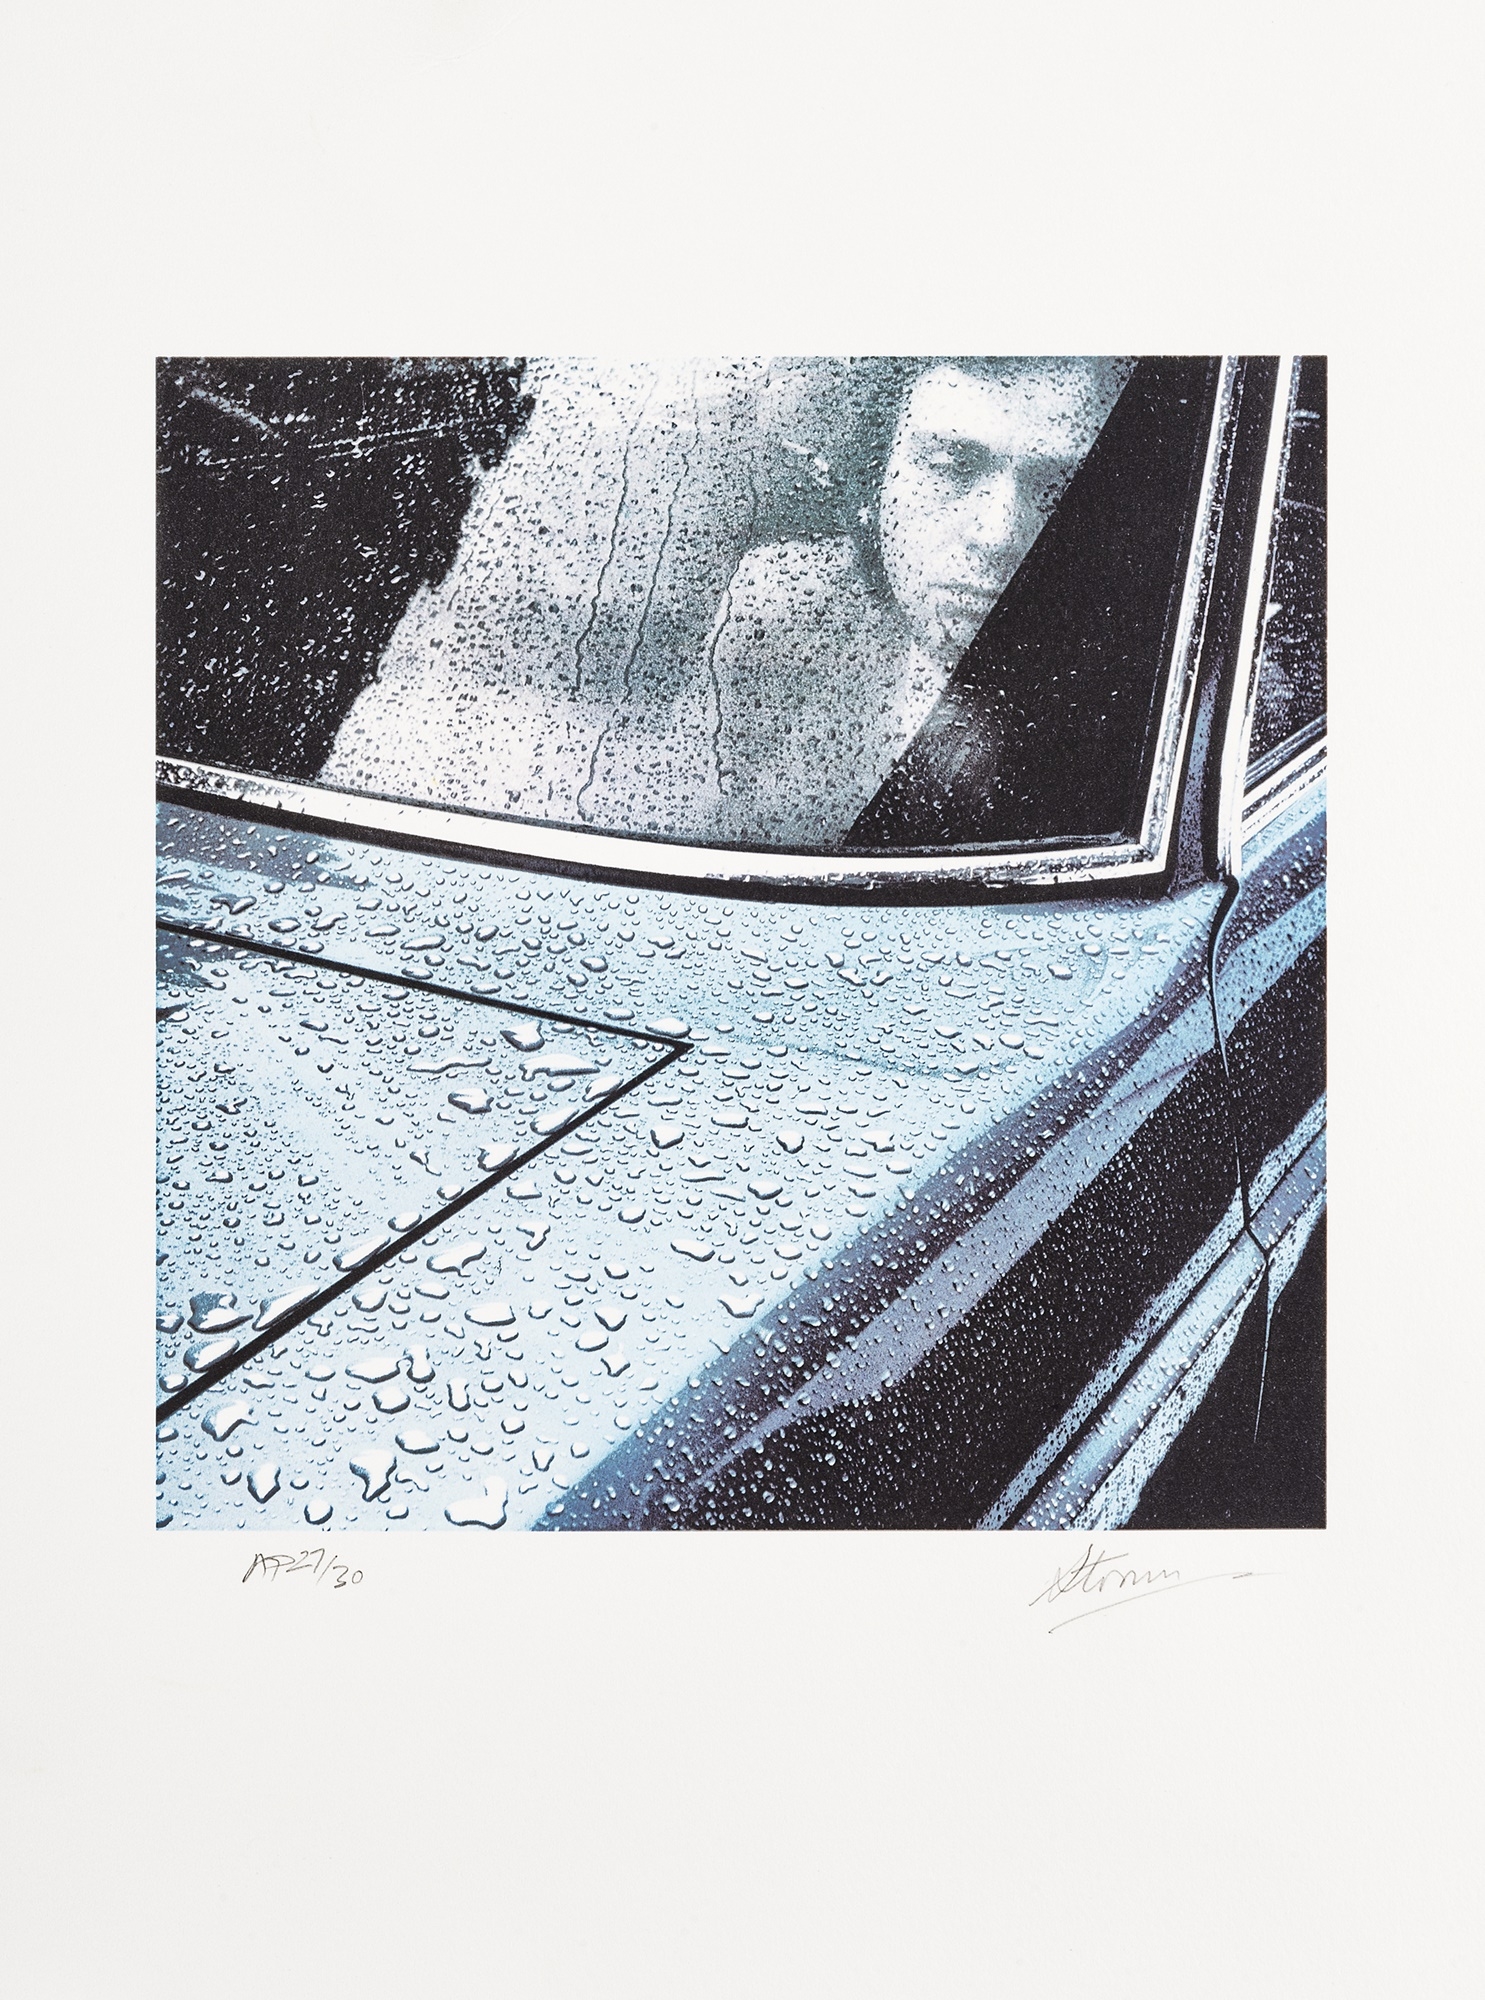 Peter Gabriel - Car by Storm Thorgerson